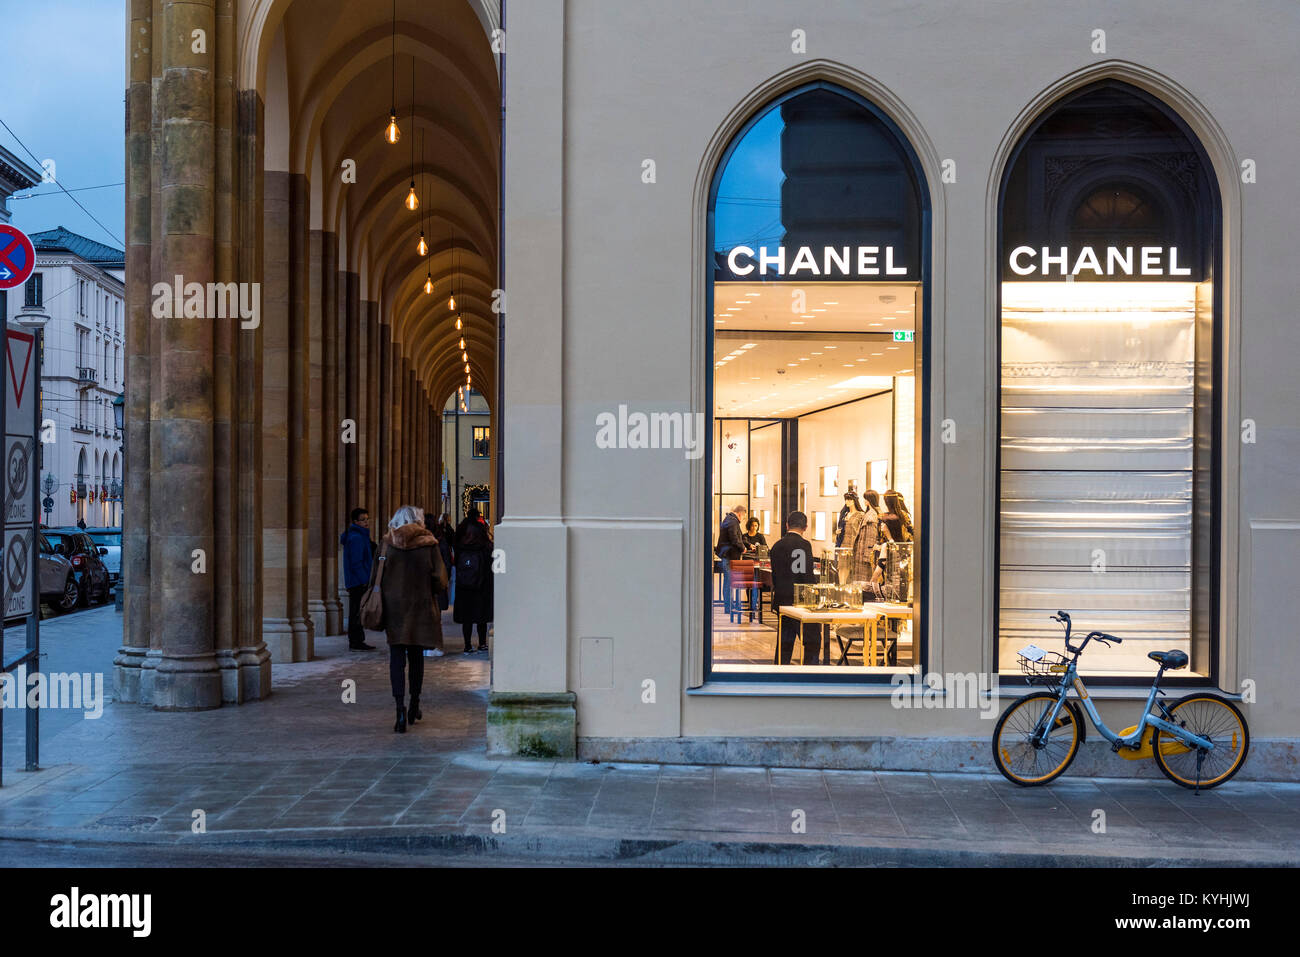 Chanel Shop at Maximilianstraße, München, Germany Stock Photo - Alamy